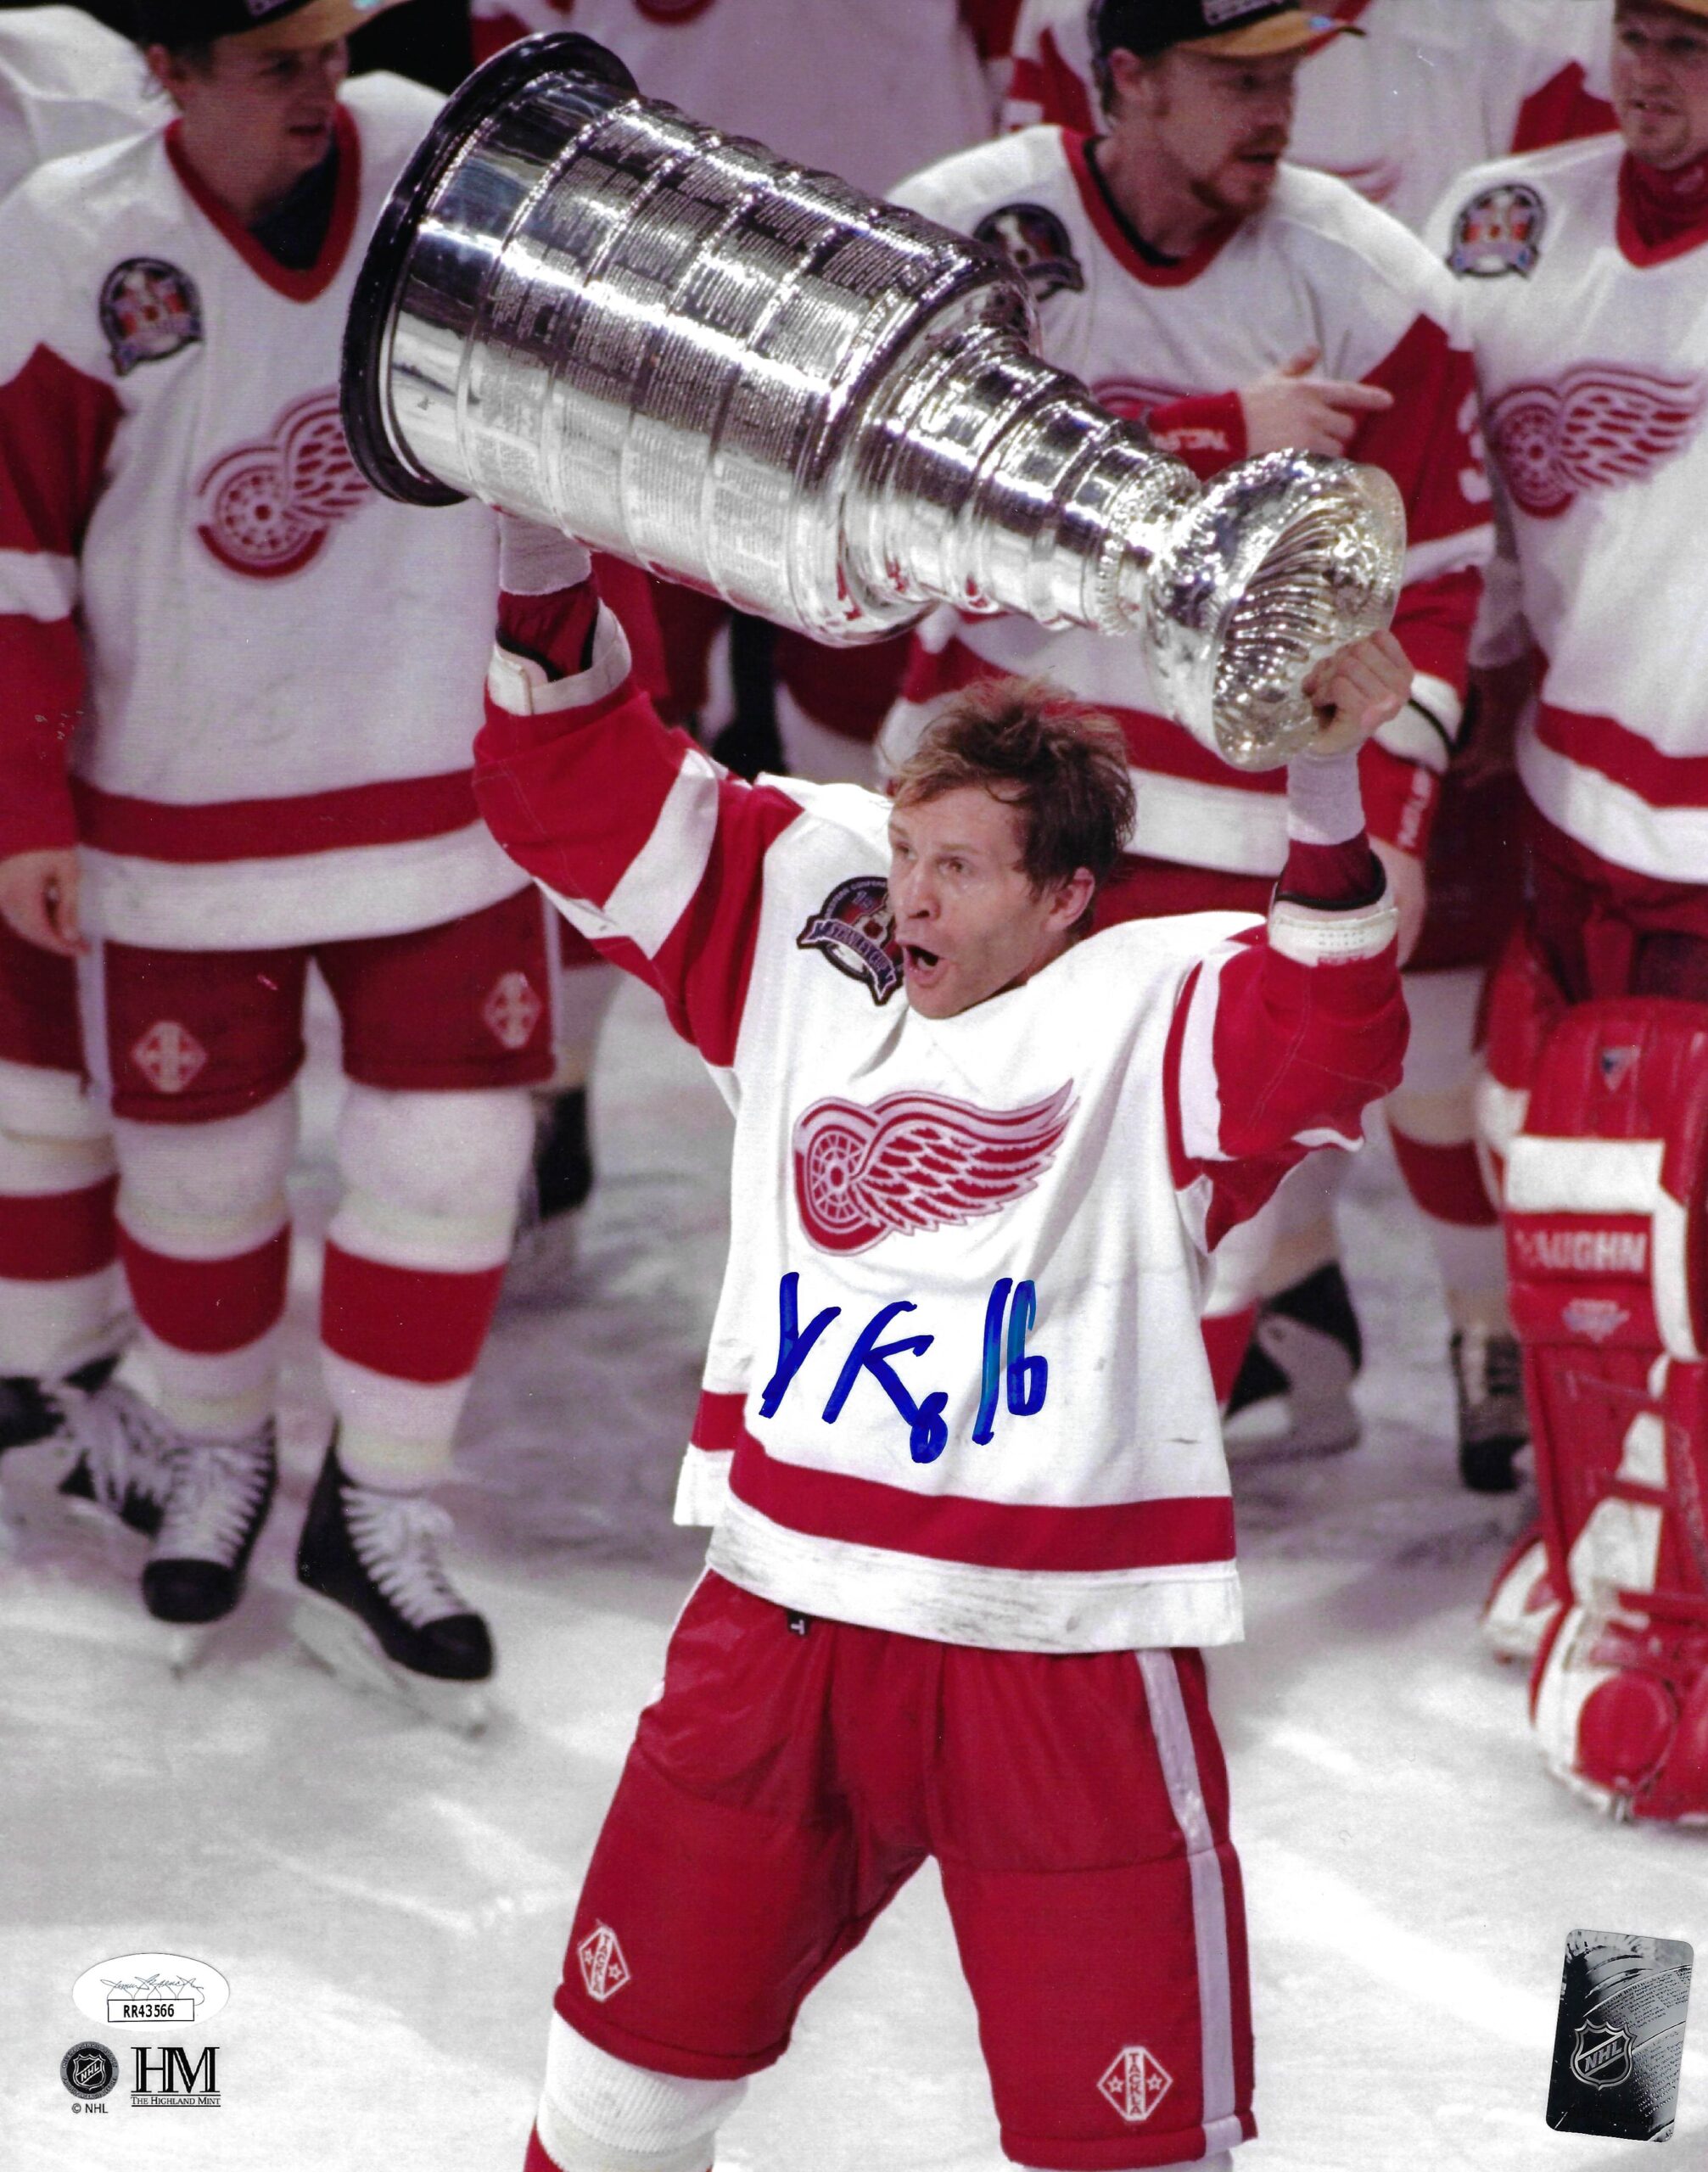 Vladimir Konstantinov Detroit Red Wings SIGNED AUTOGRAPHED 1992-93 Pro Set  Card